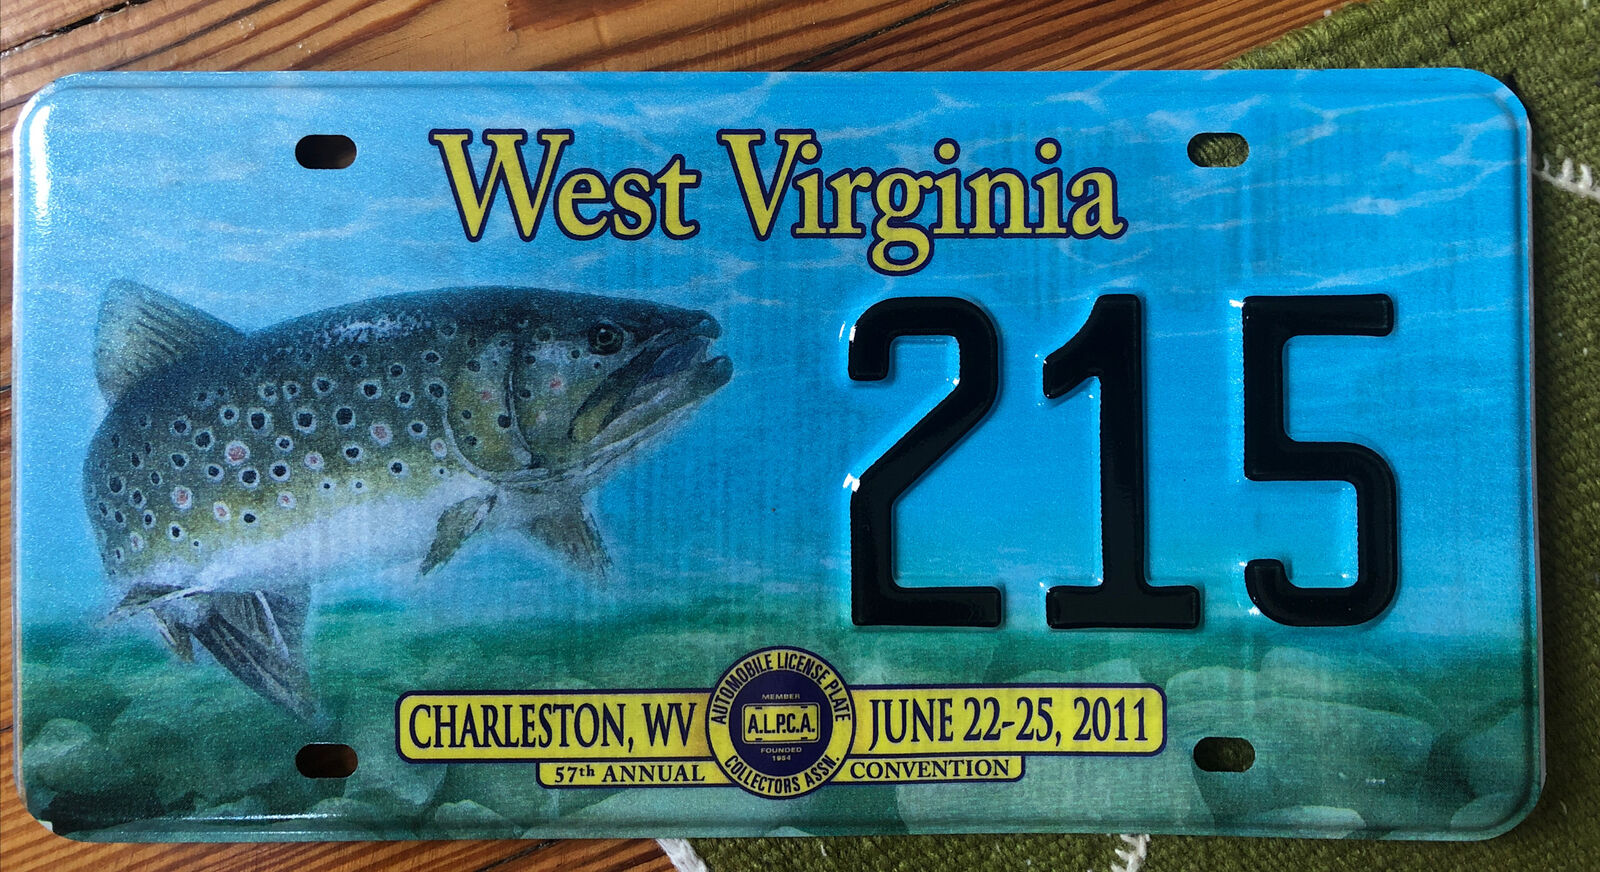 ALPCA 2011 Charleston West Virginia Convention License Plate 215